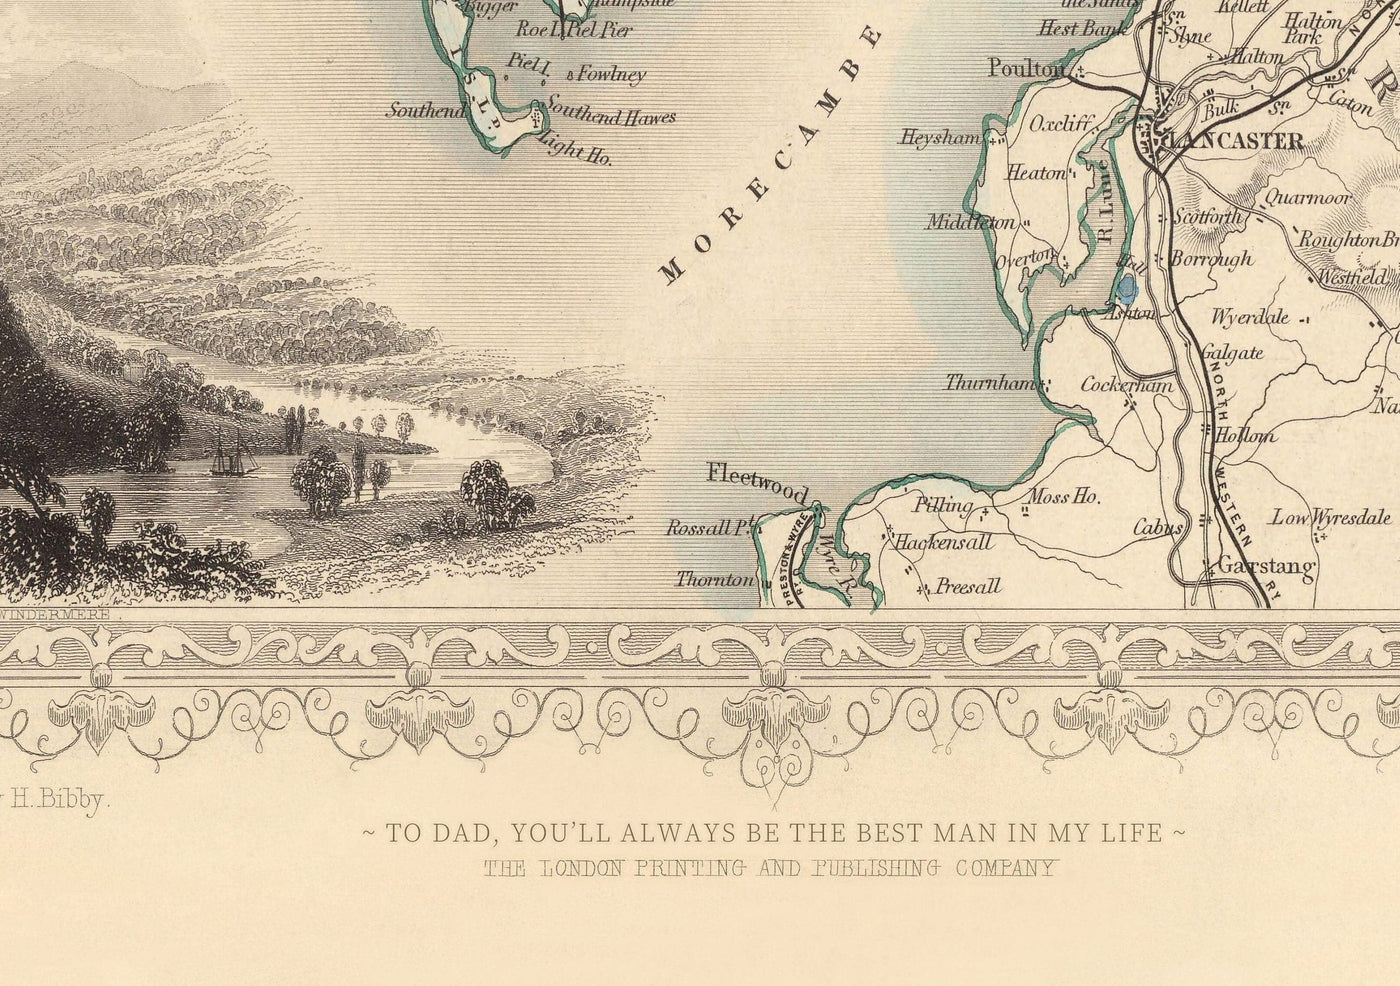 Old Map of Ireland, Eire 1851 by Tallis & Rapkin - Victorian Handcoloured Provinces, Cities, Dublin, Railways